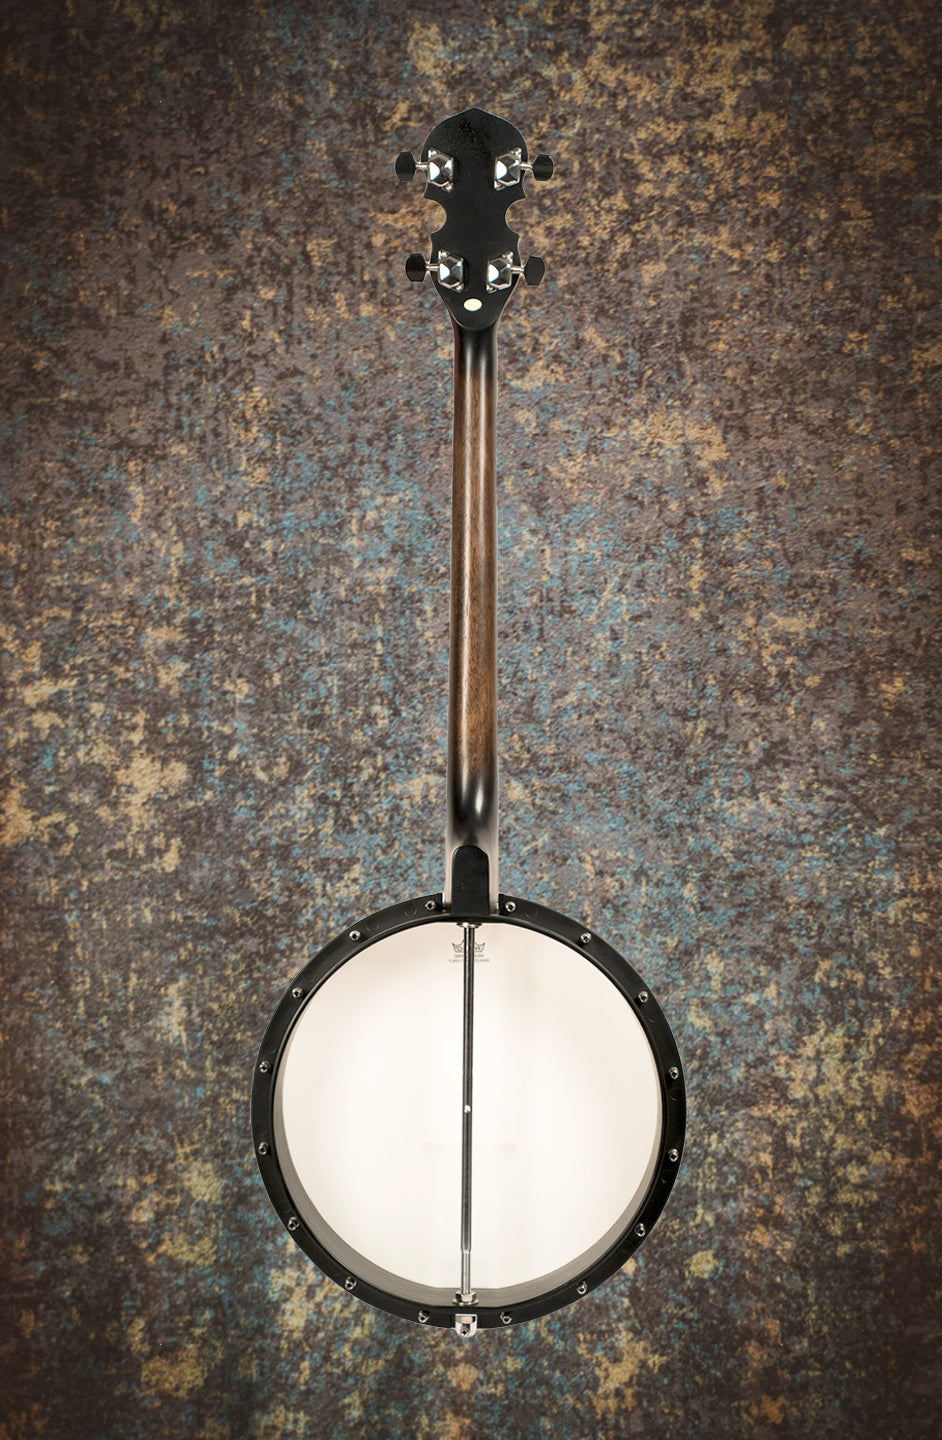 Gold Tone AC-4 Acoustic Composite Tenor Banjo